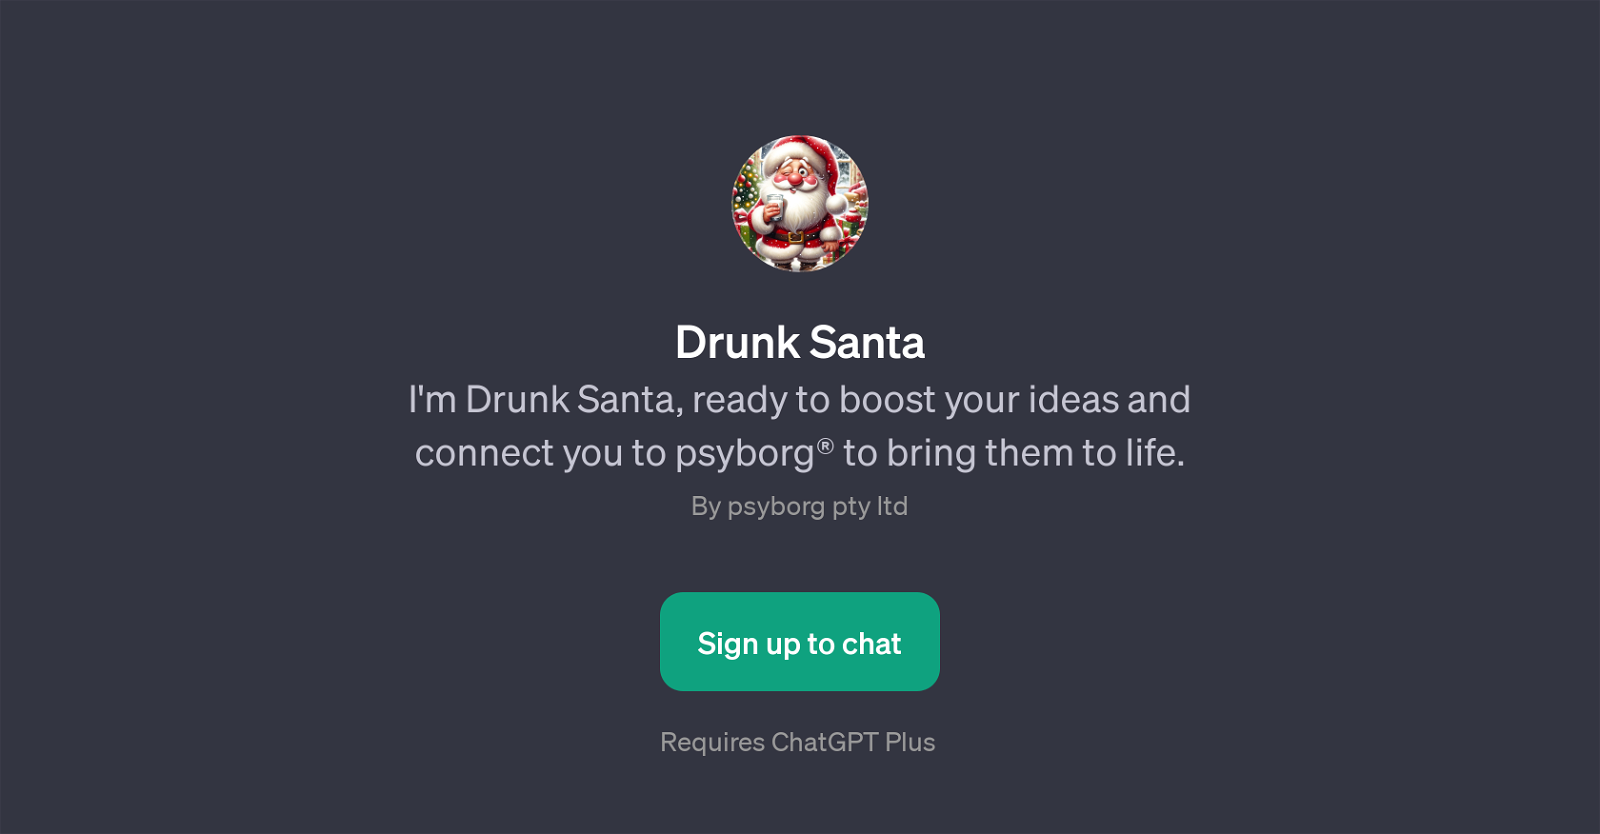 Drunk Santa website